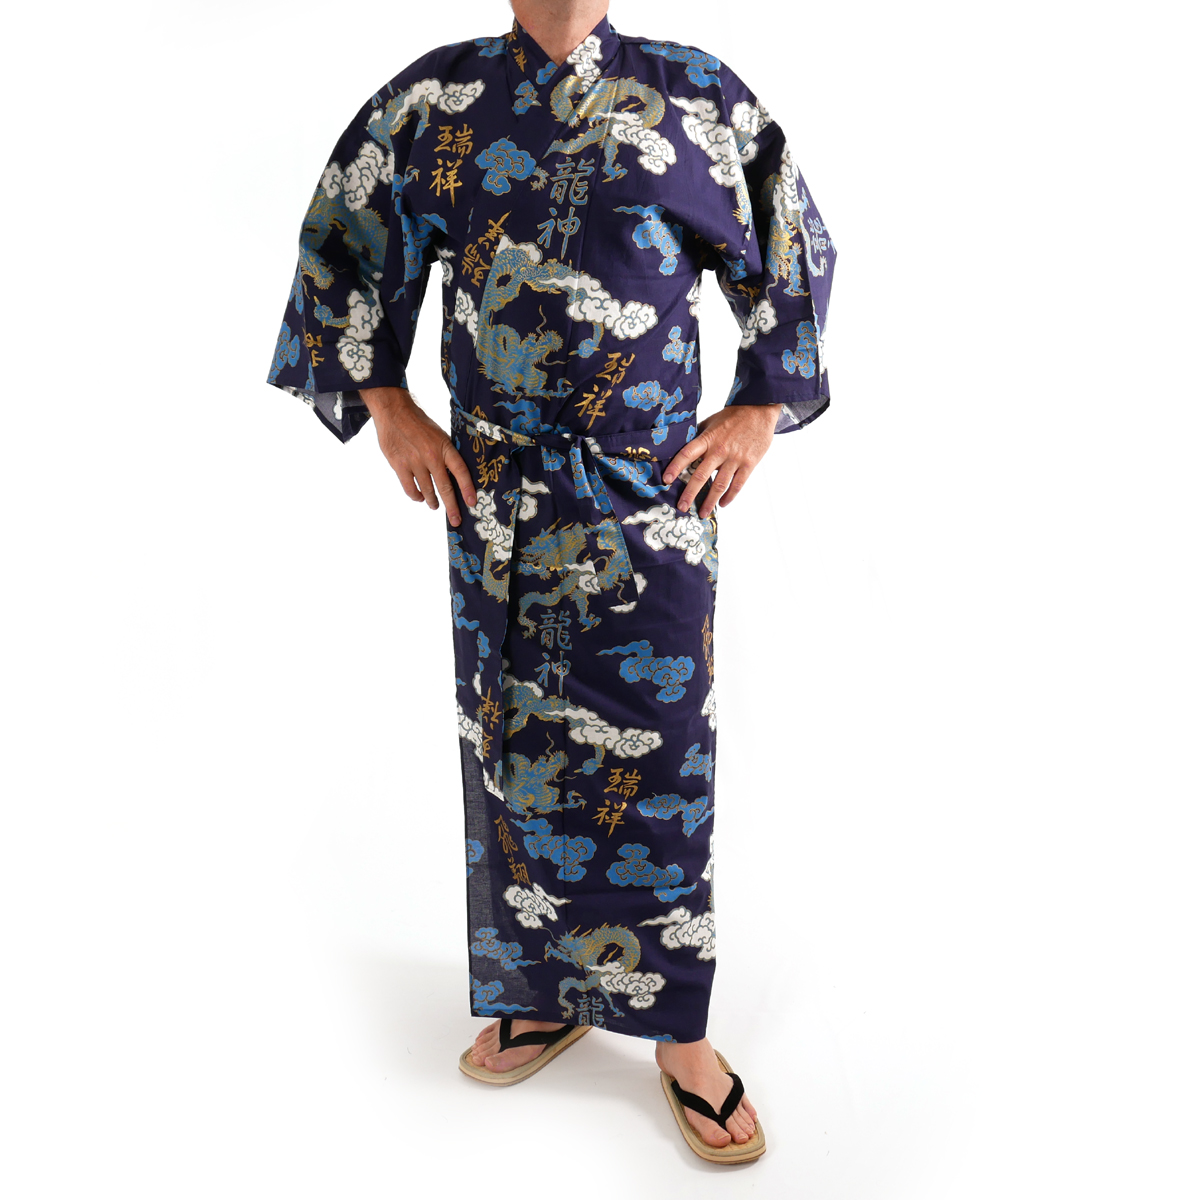 Kimono negro japonés para hombre en algodón., KAMIKAZE, kanji